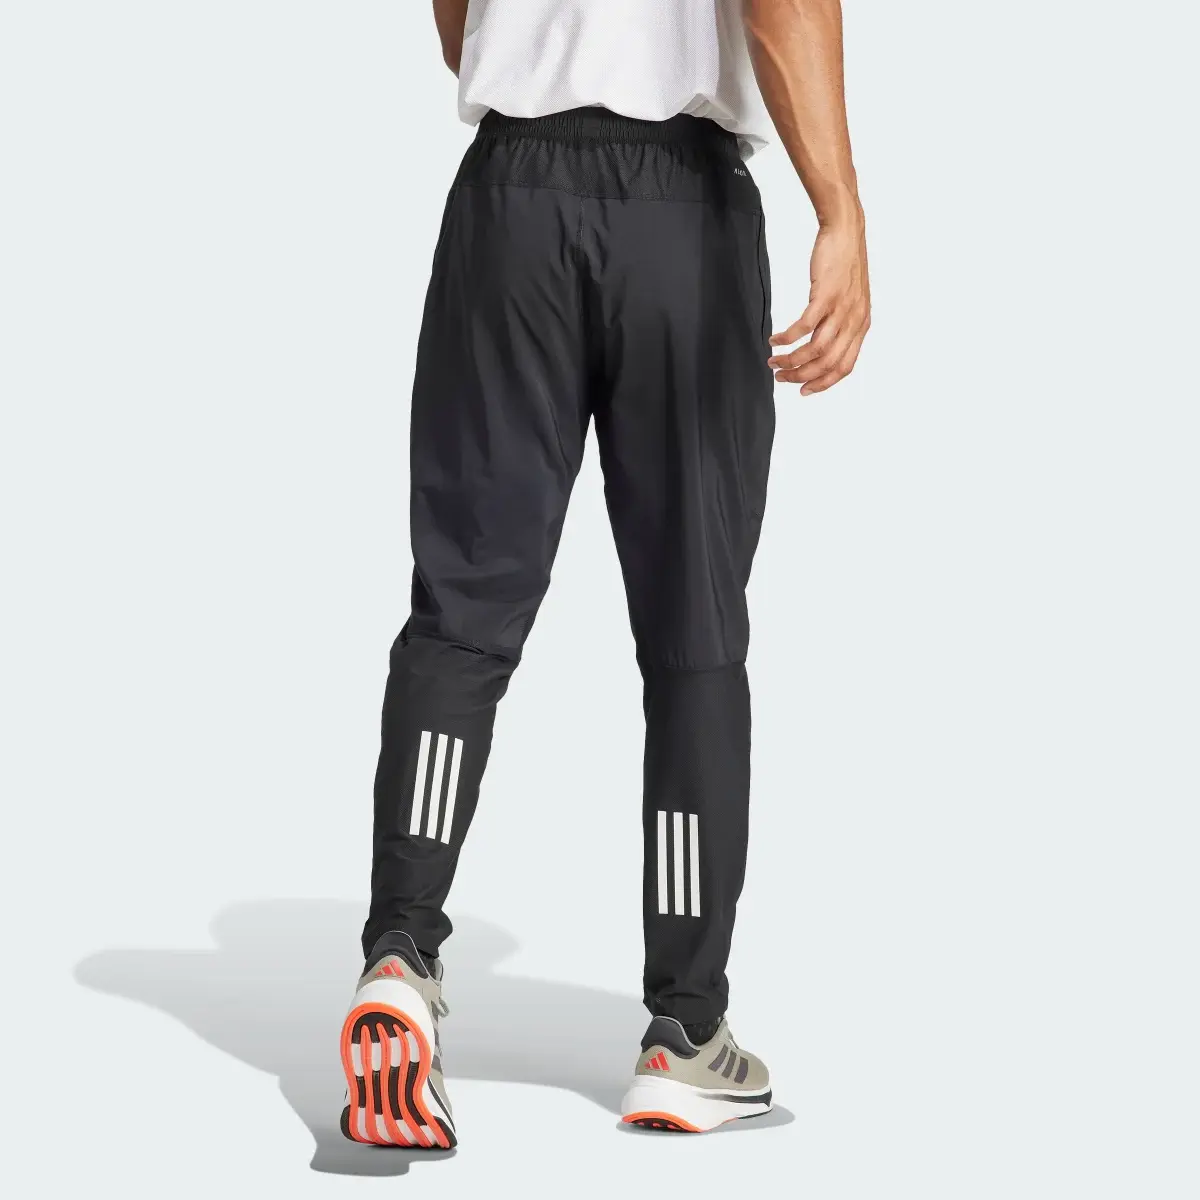 Adidas Own The Run Pants. 2